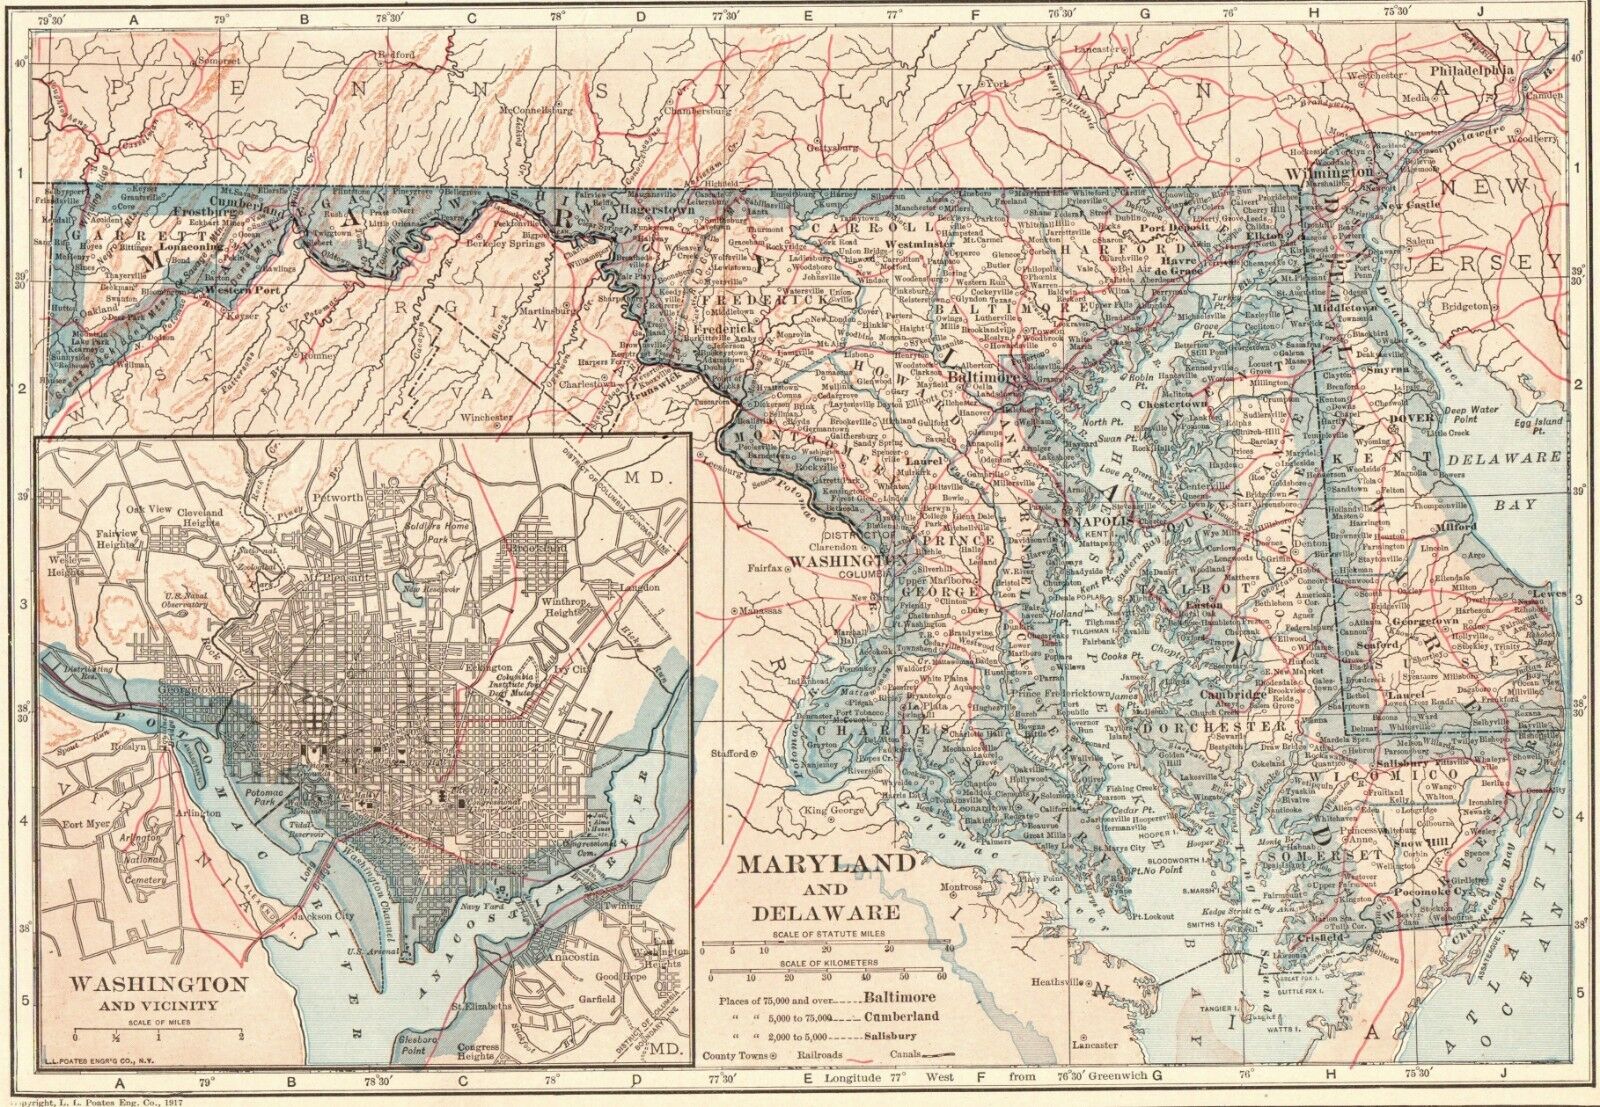 Marylandmap